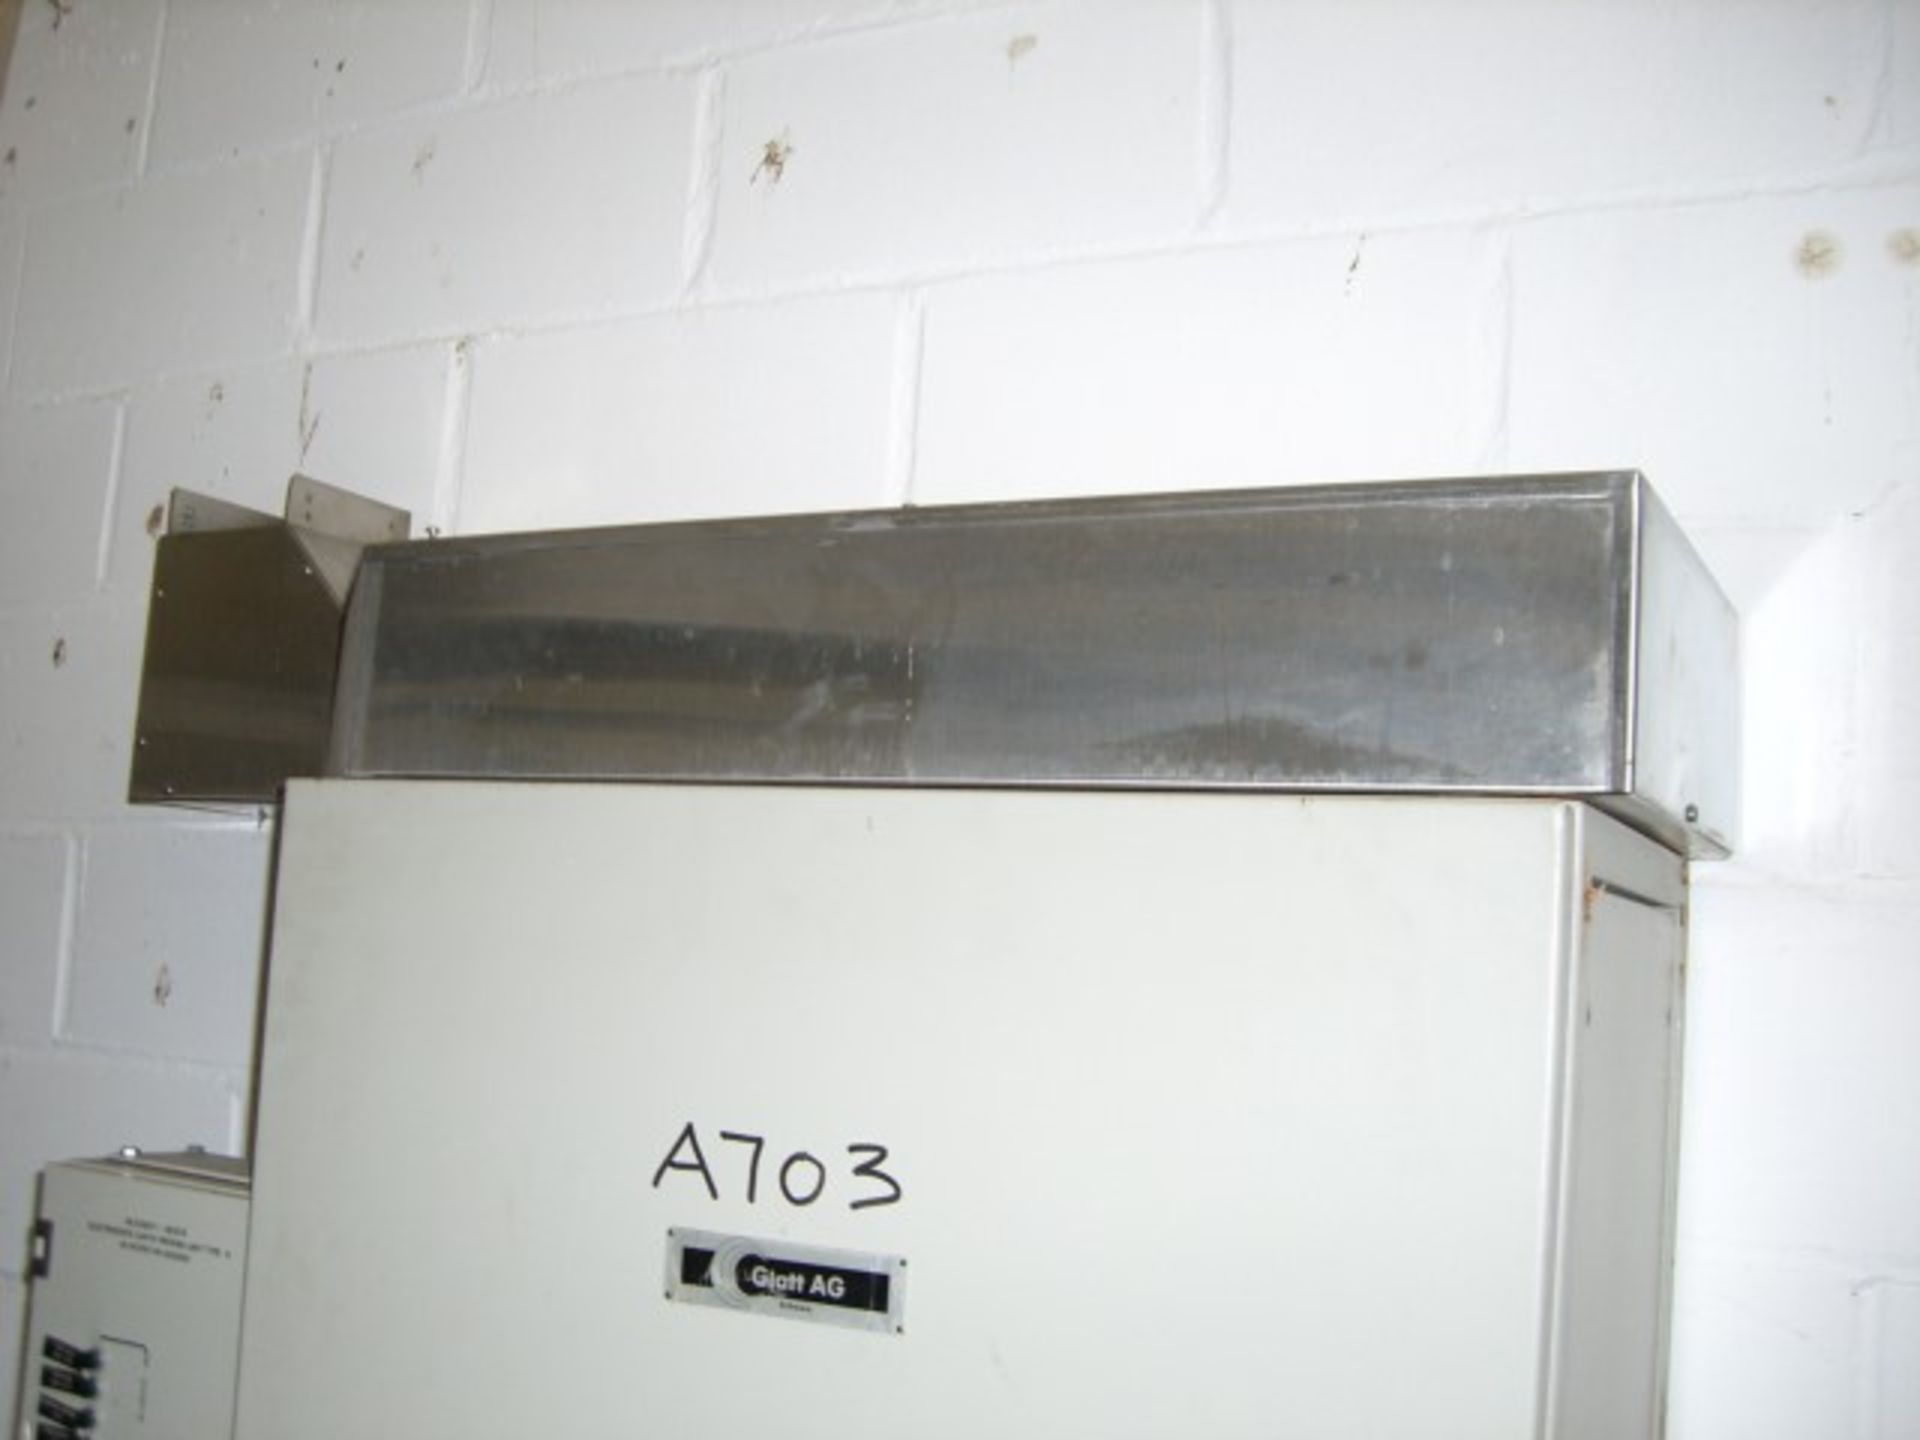 Glatt GPCG 5 Fluid Bed Dryer Granulator, all stainless steel construction including side rails, - Image 12 of 23